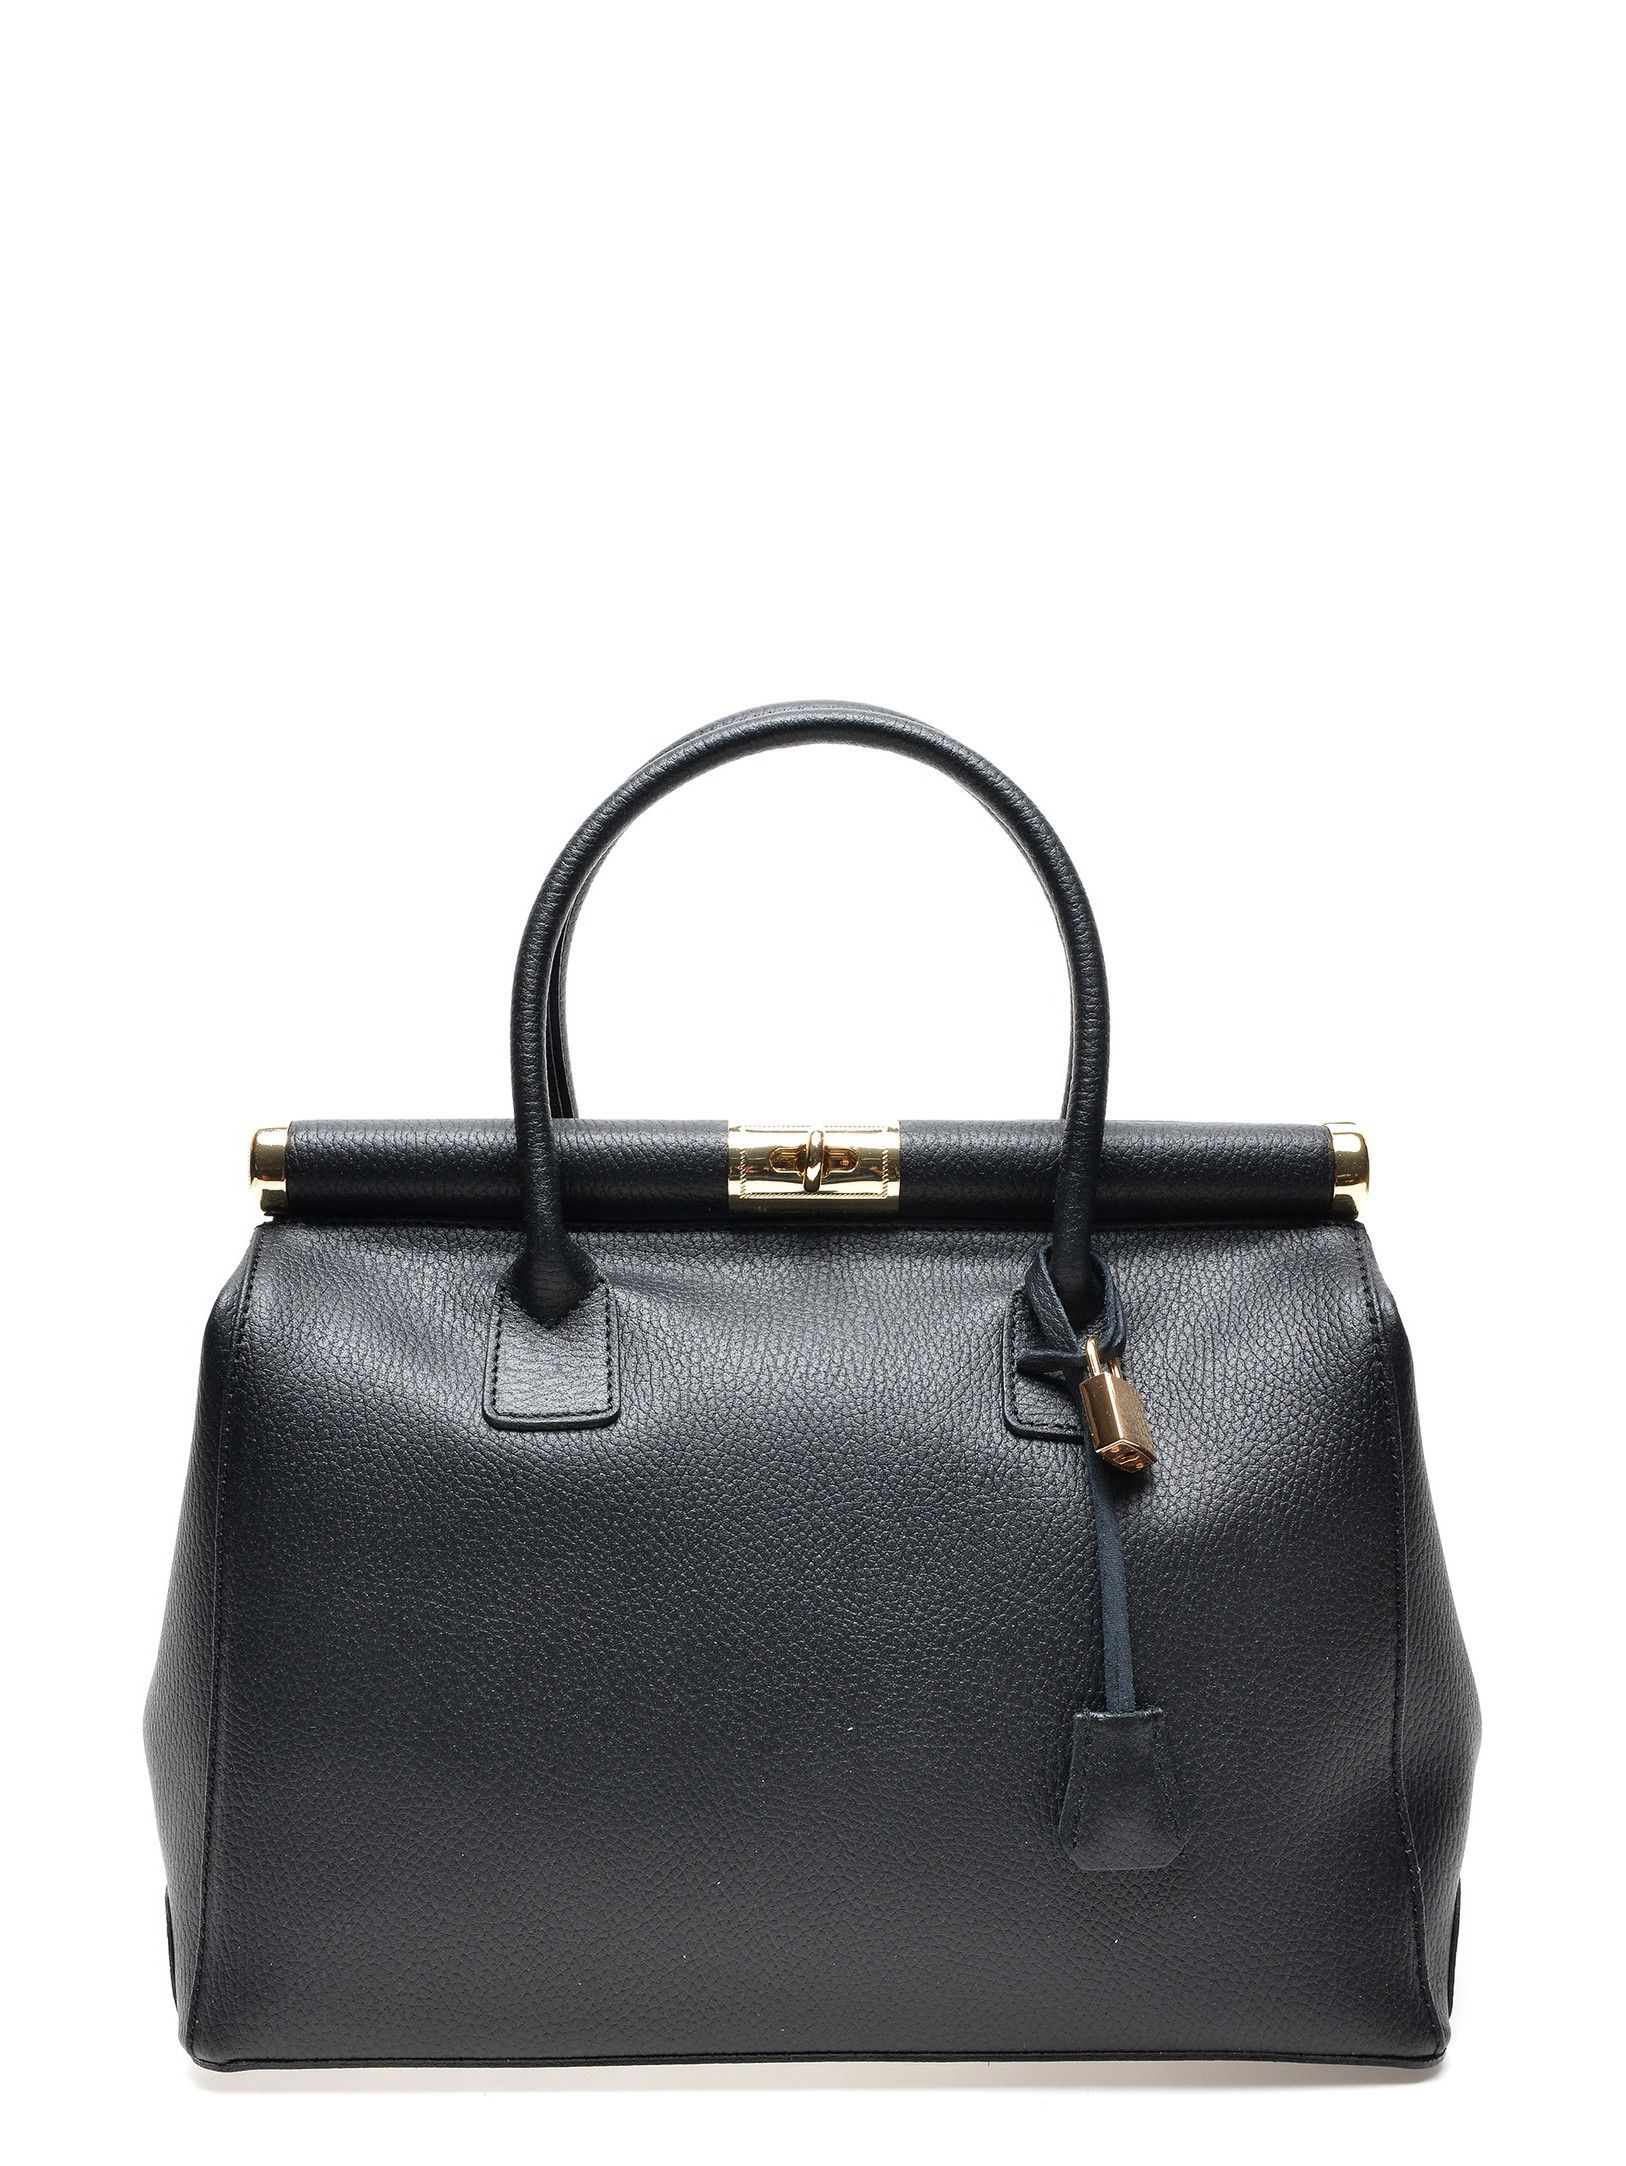 Handbag
100% cow leather
Top clasp closure
Double compartment bag
Interior zip pocket
Dimensions(L):26x35x16 cm
Handle: 40 cm
Shoulder strap:110 cm